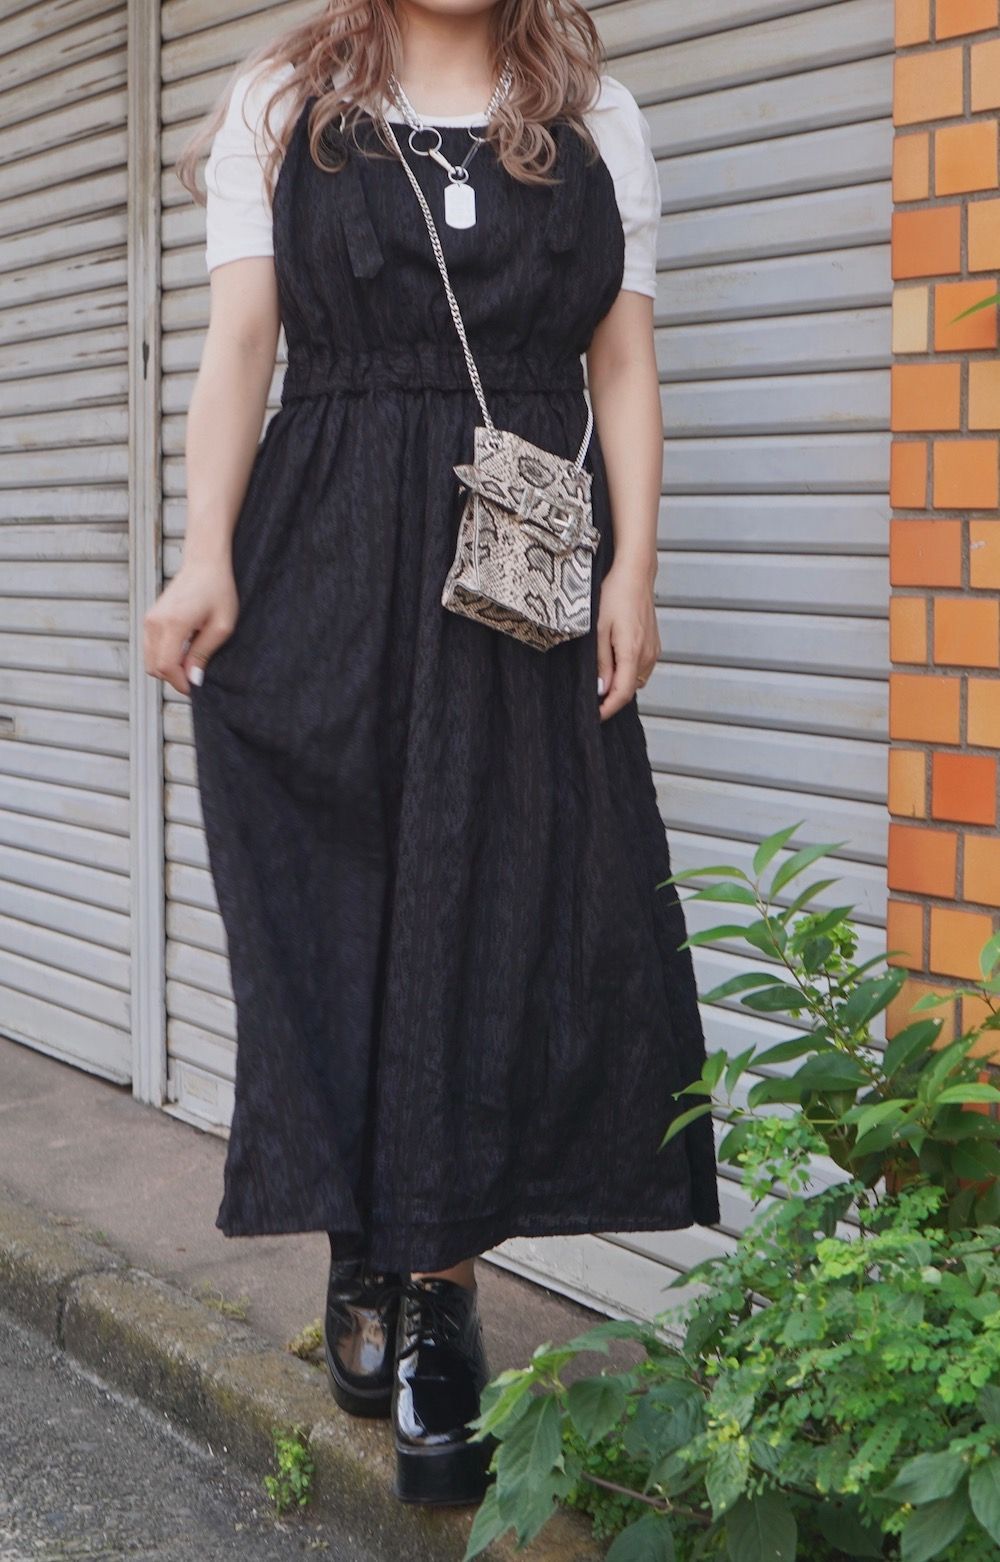 Lacy Stripes Salopette Flare Skirt black - imukat Select - メルカリ